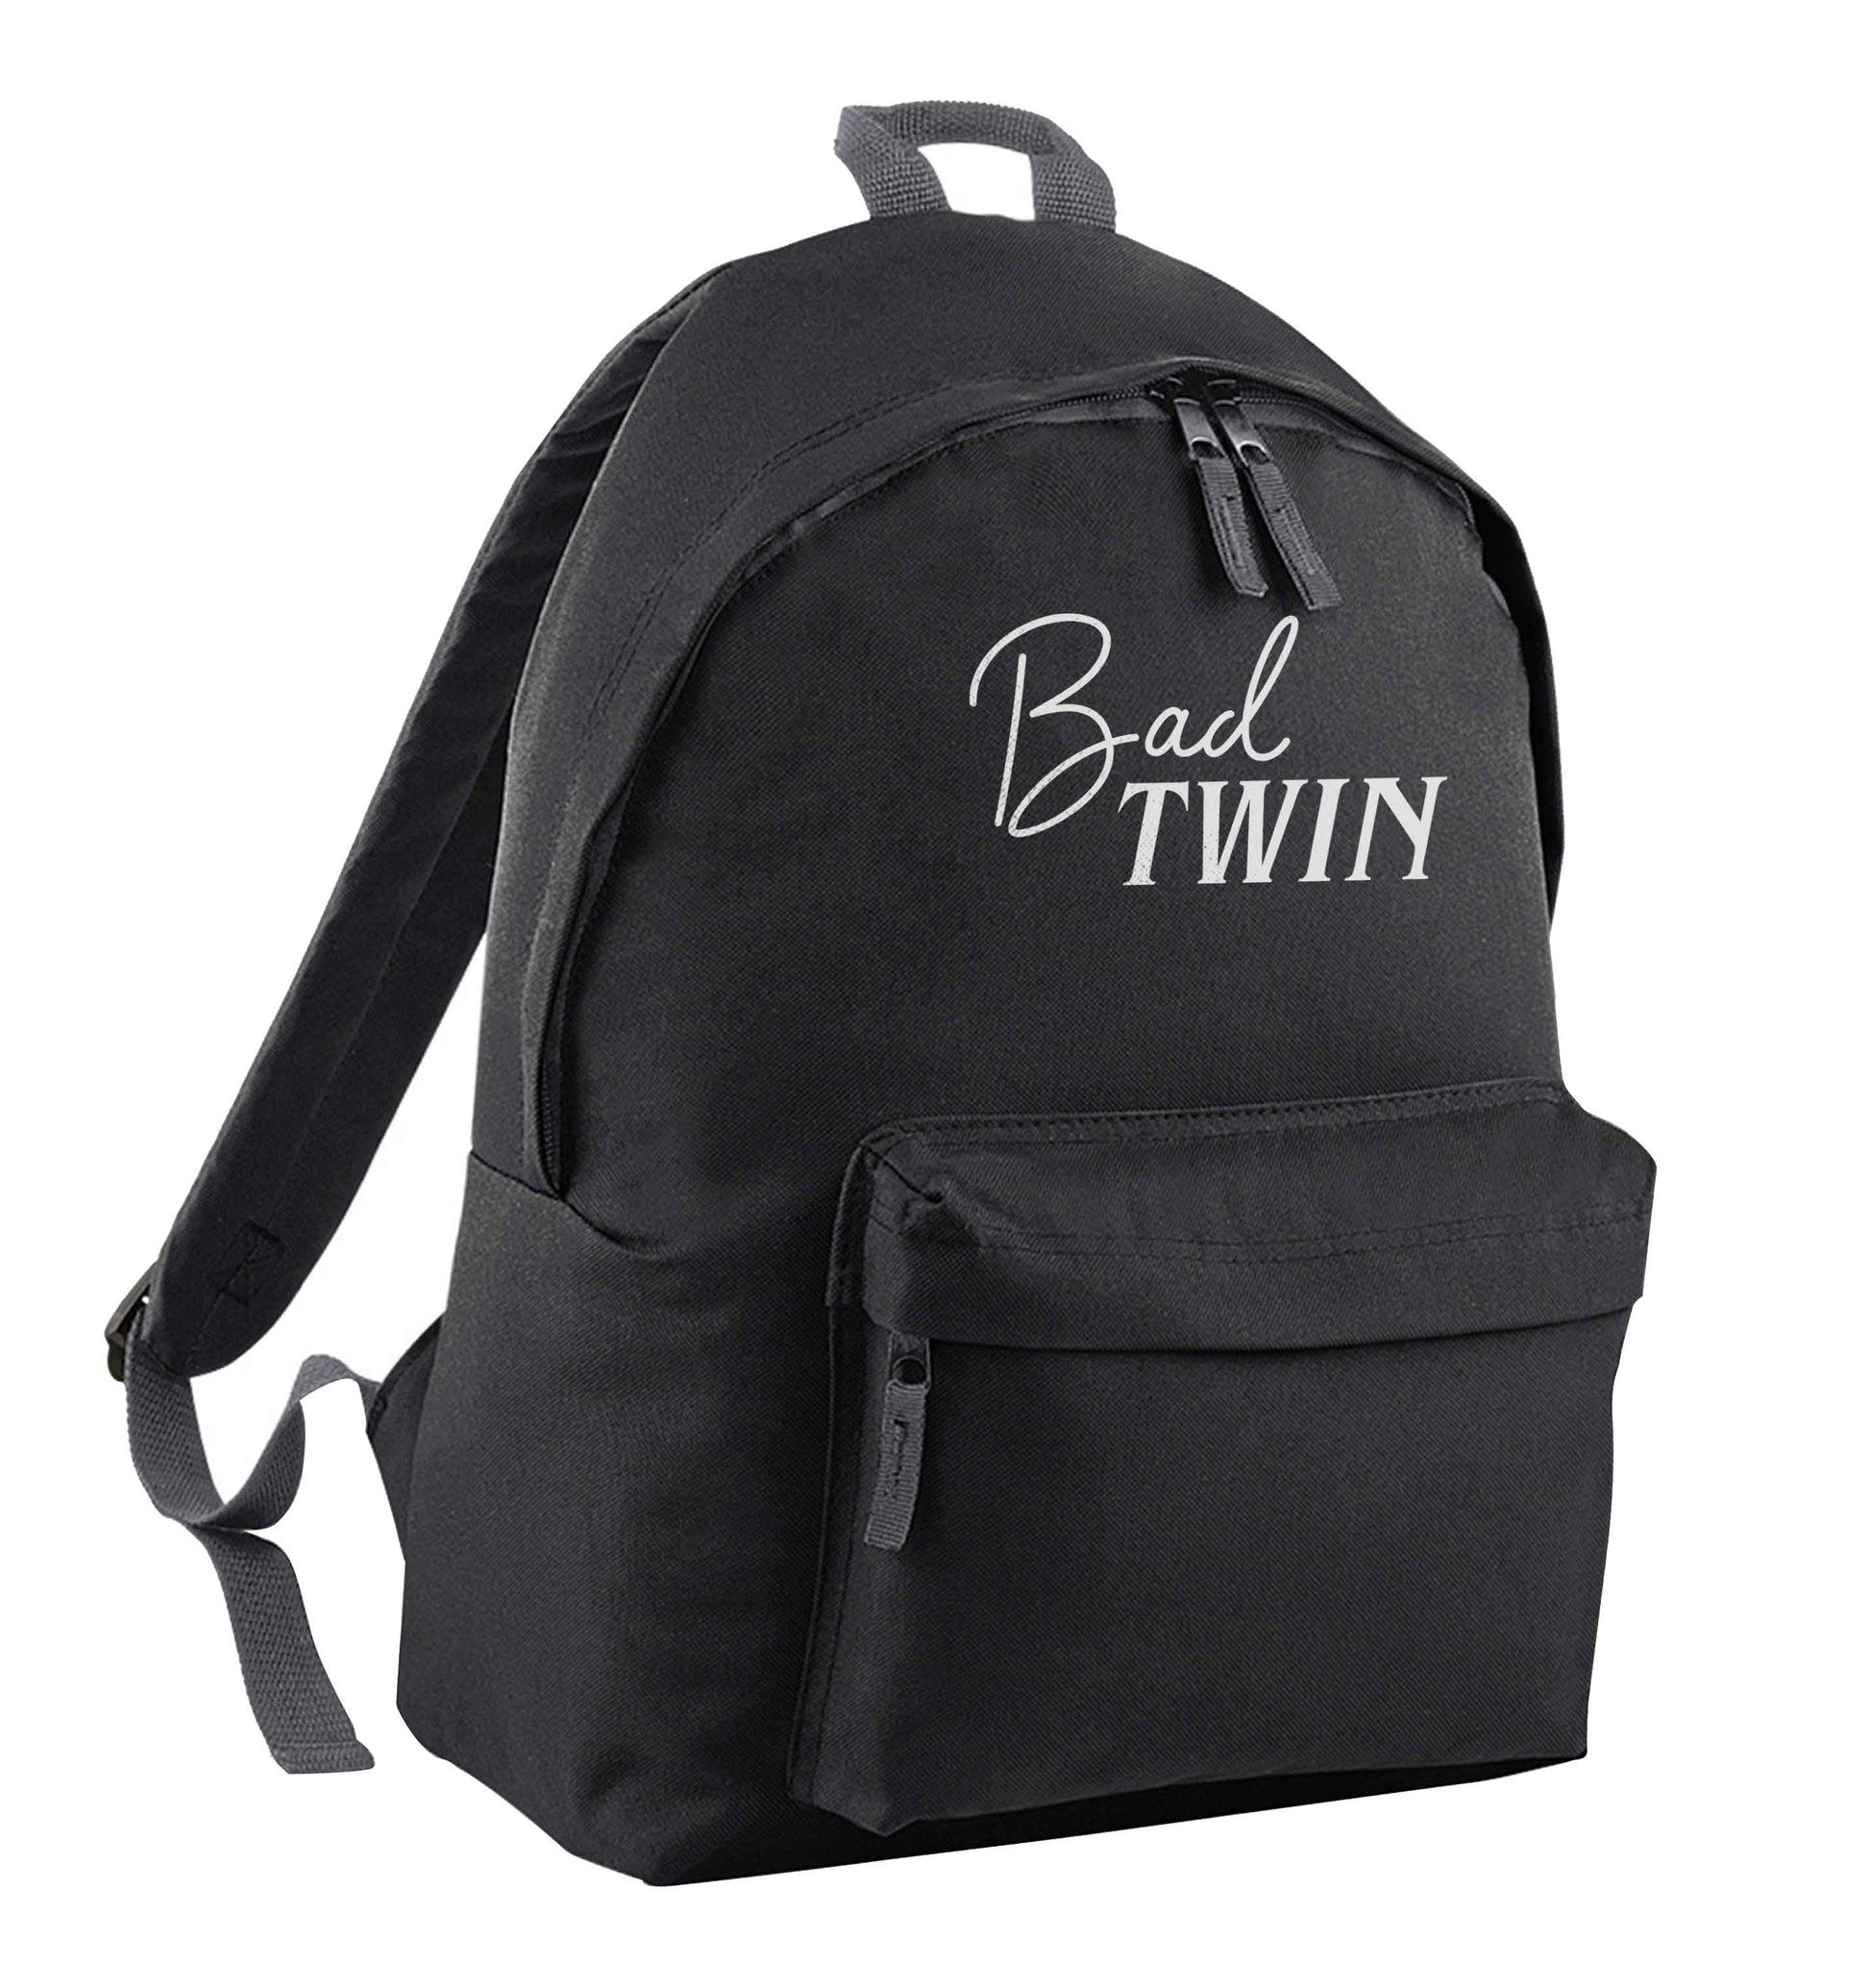 Bad twin black adults backpack